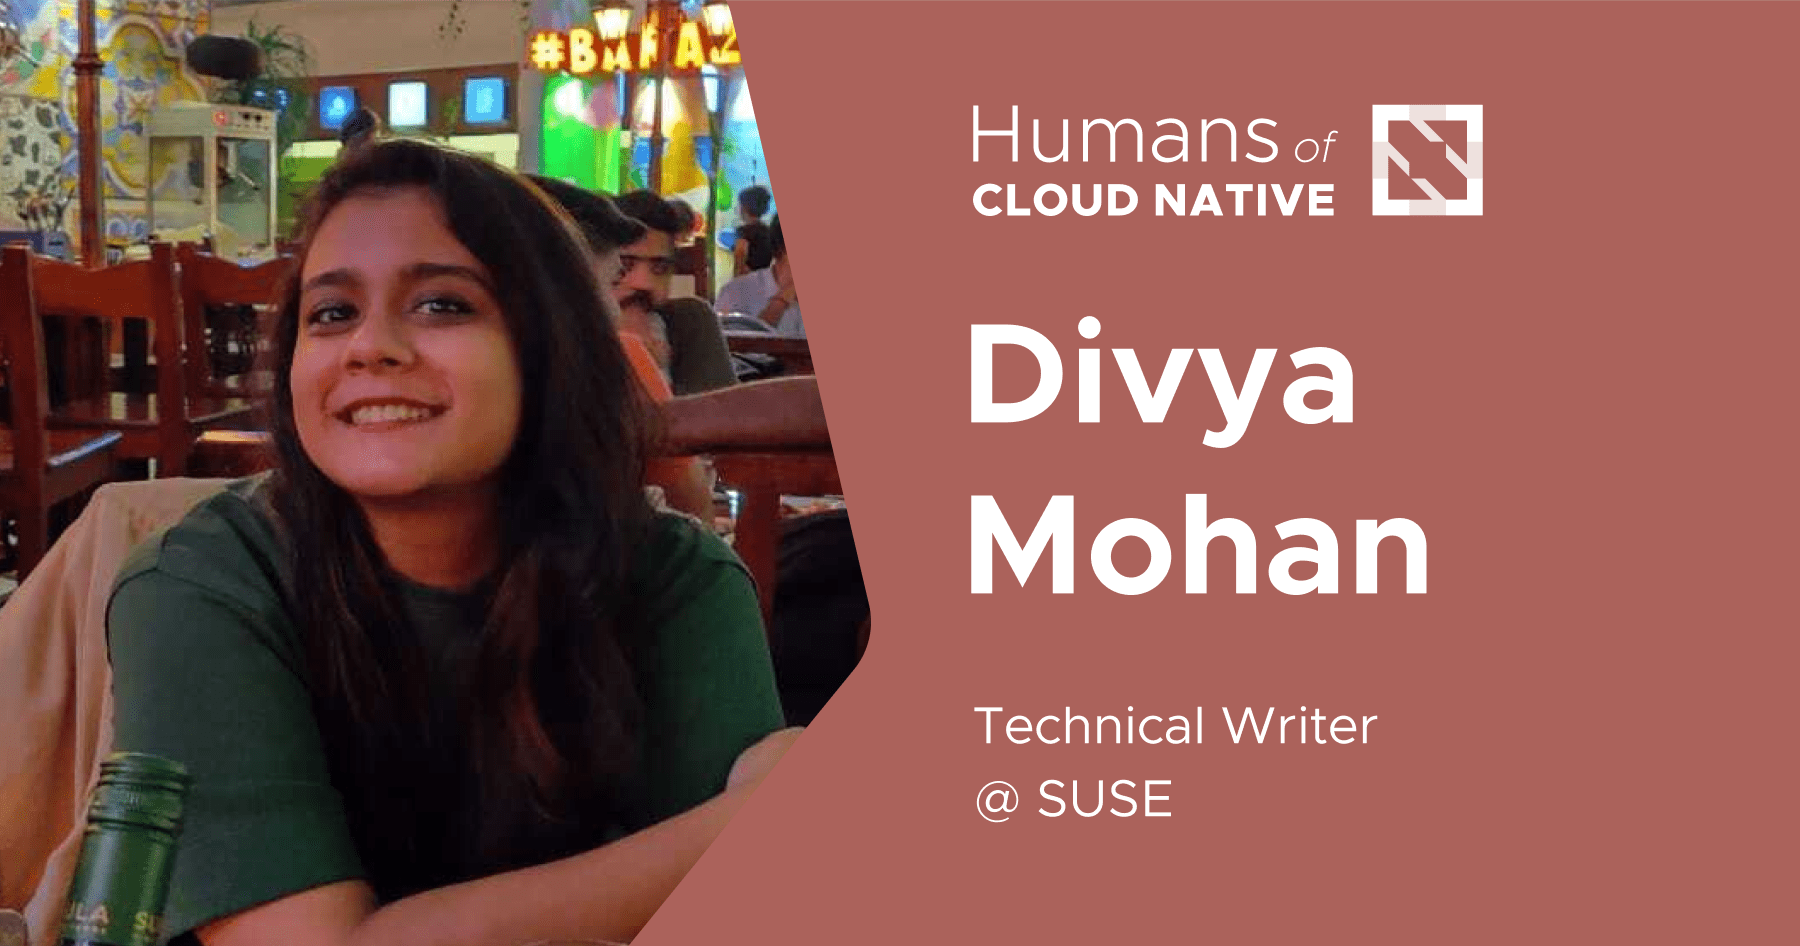 Humans of cloud native banner showing Divya Mohan